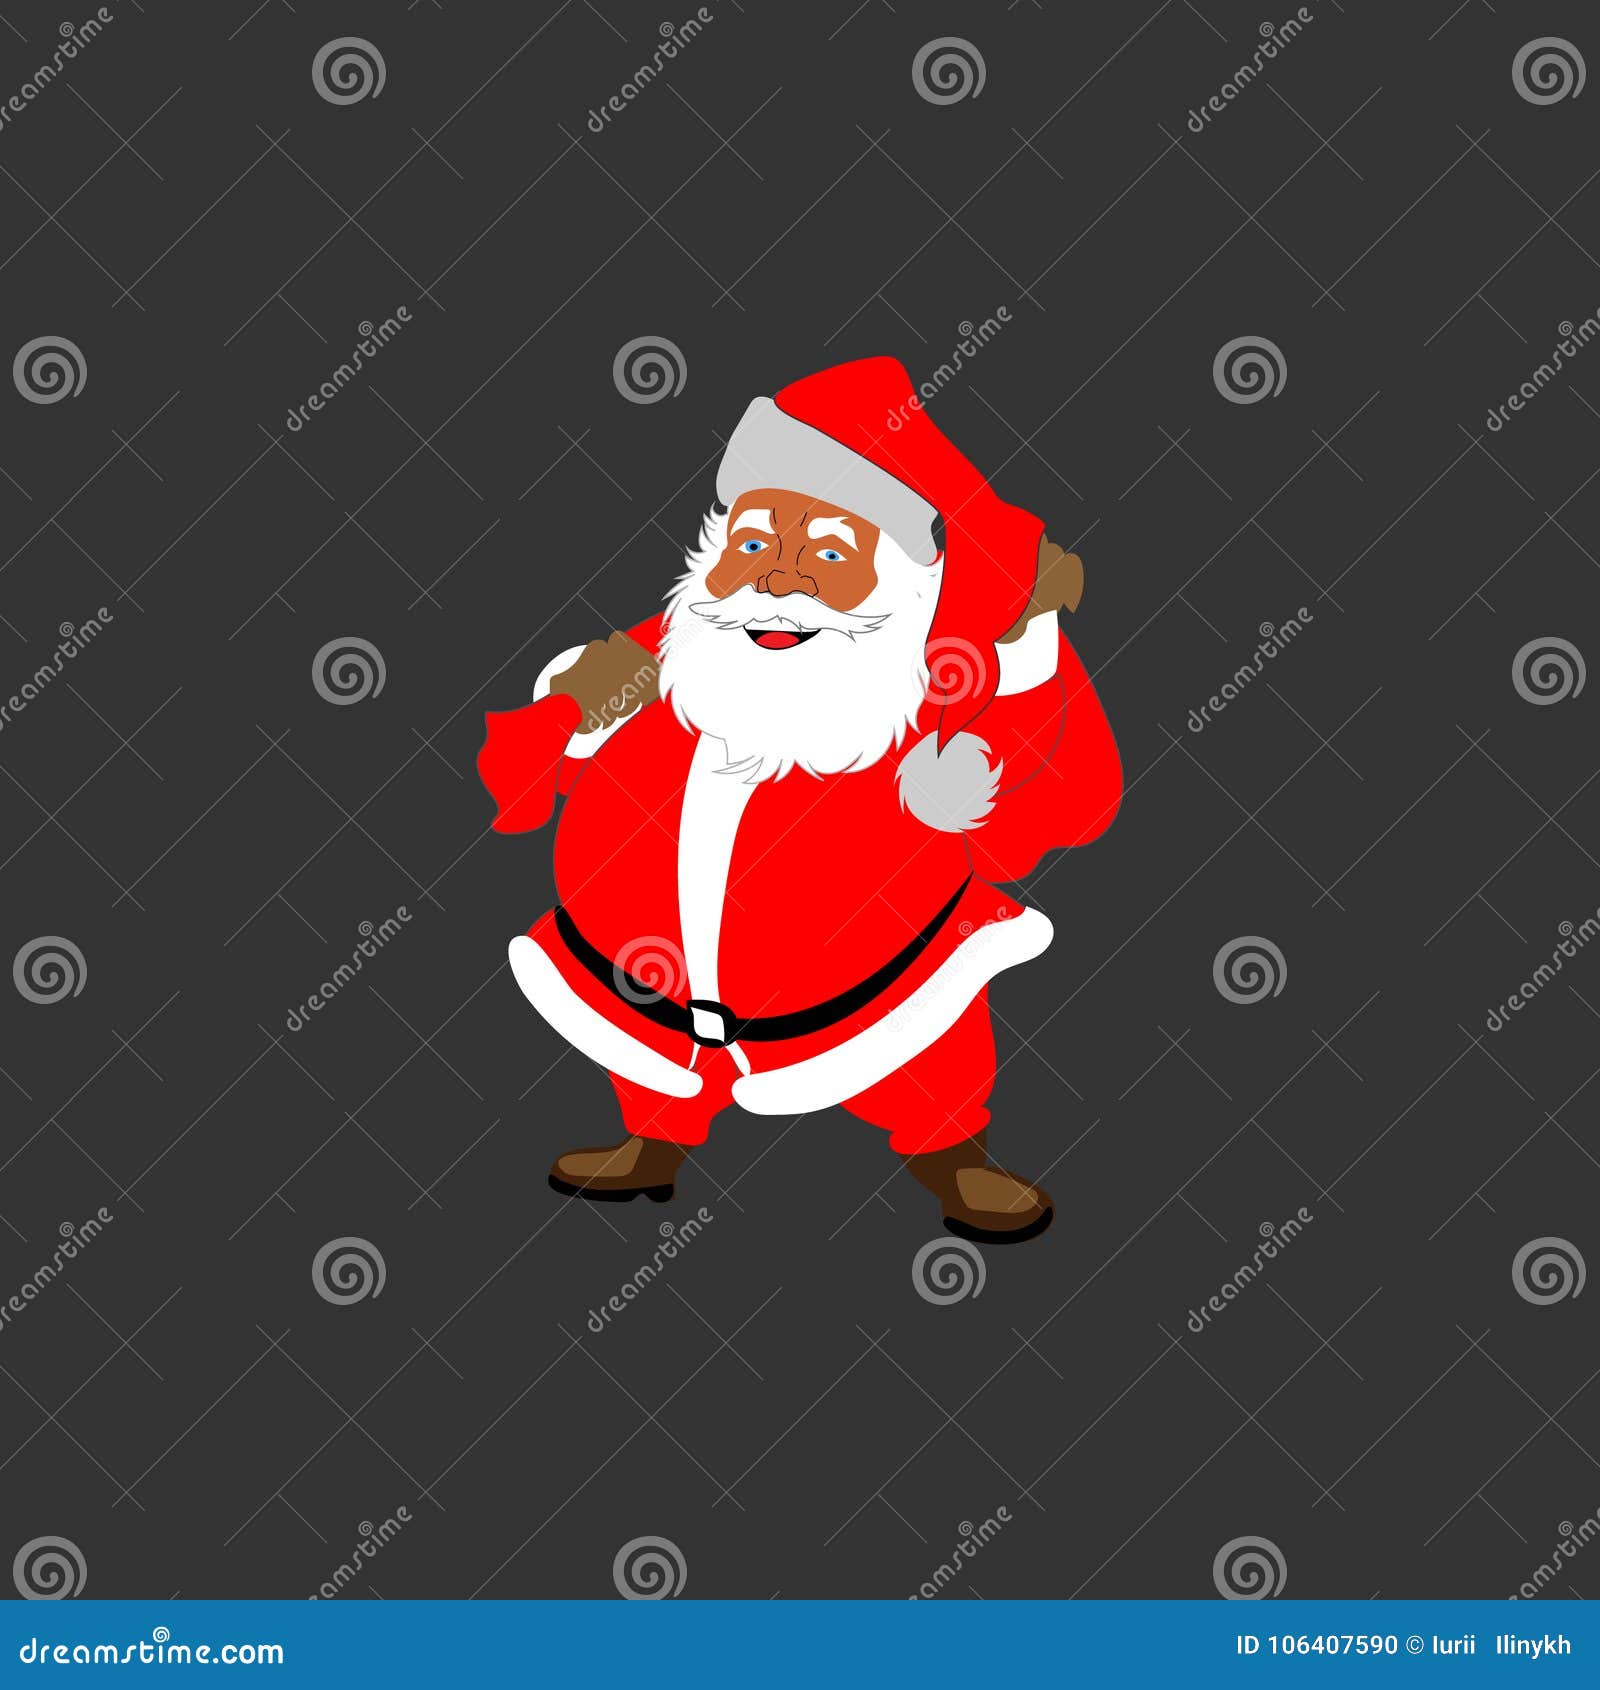 Santa-klaus in Vector is Happy Stock Vector - Illustration of claus ...